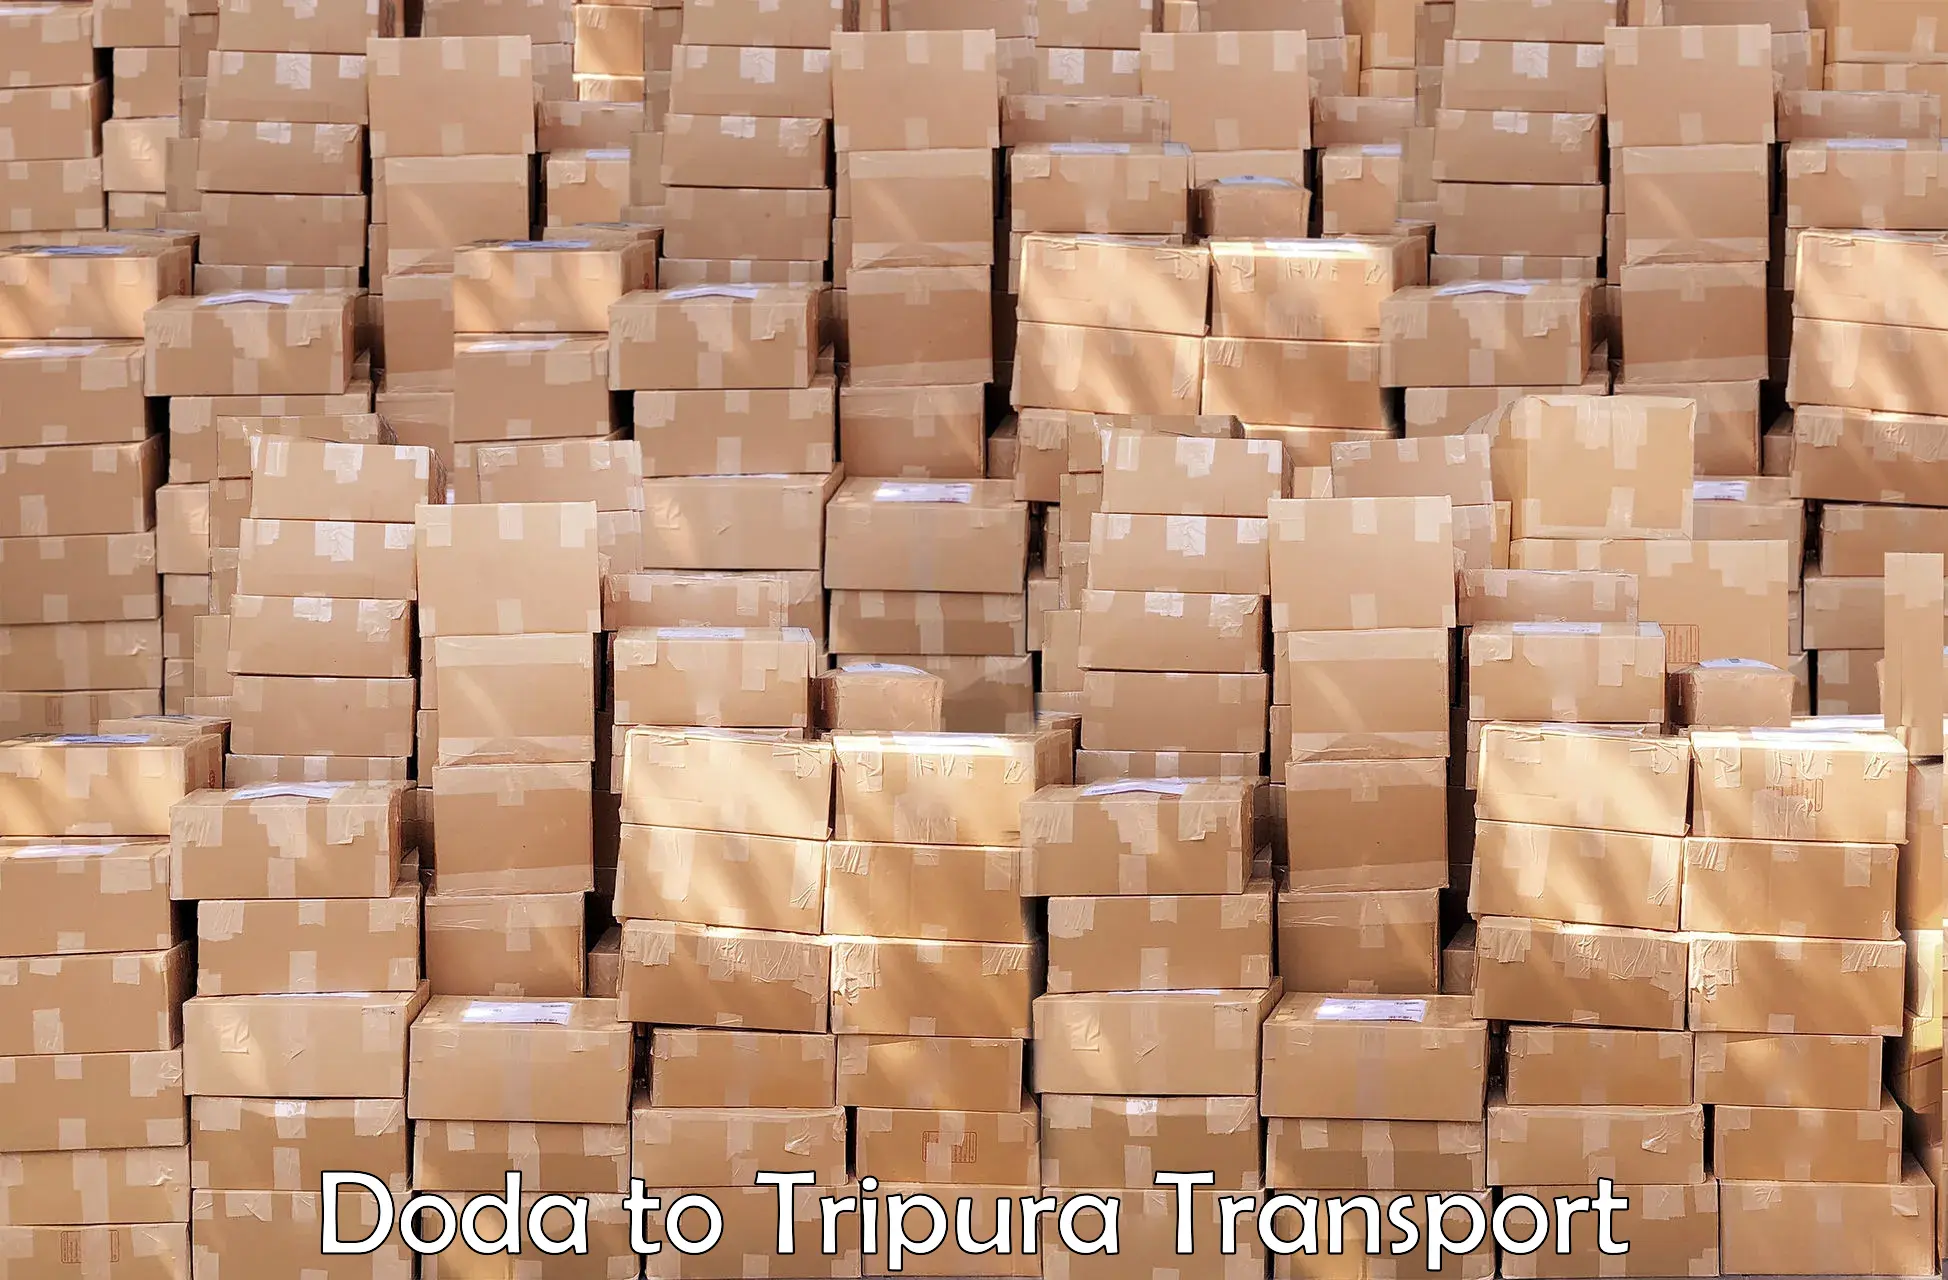 Transport shared services Doda to Udaipur Tripura